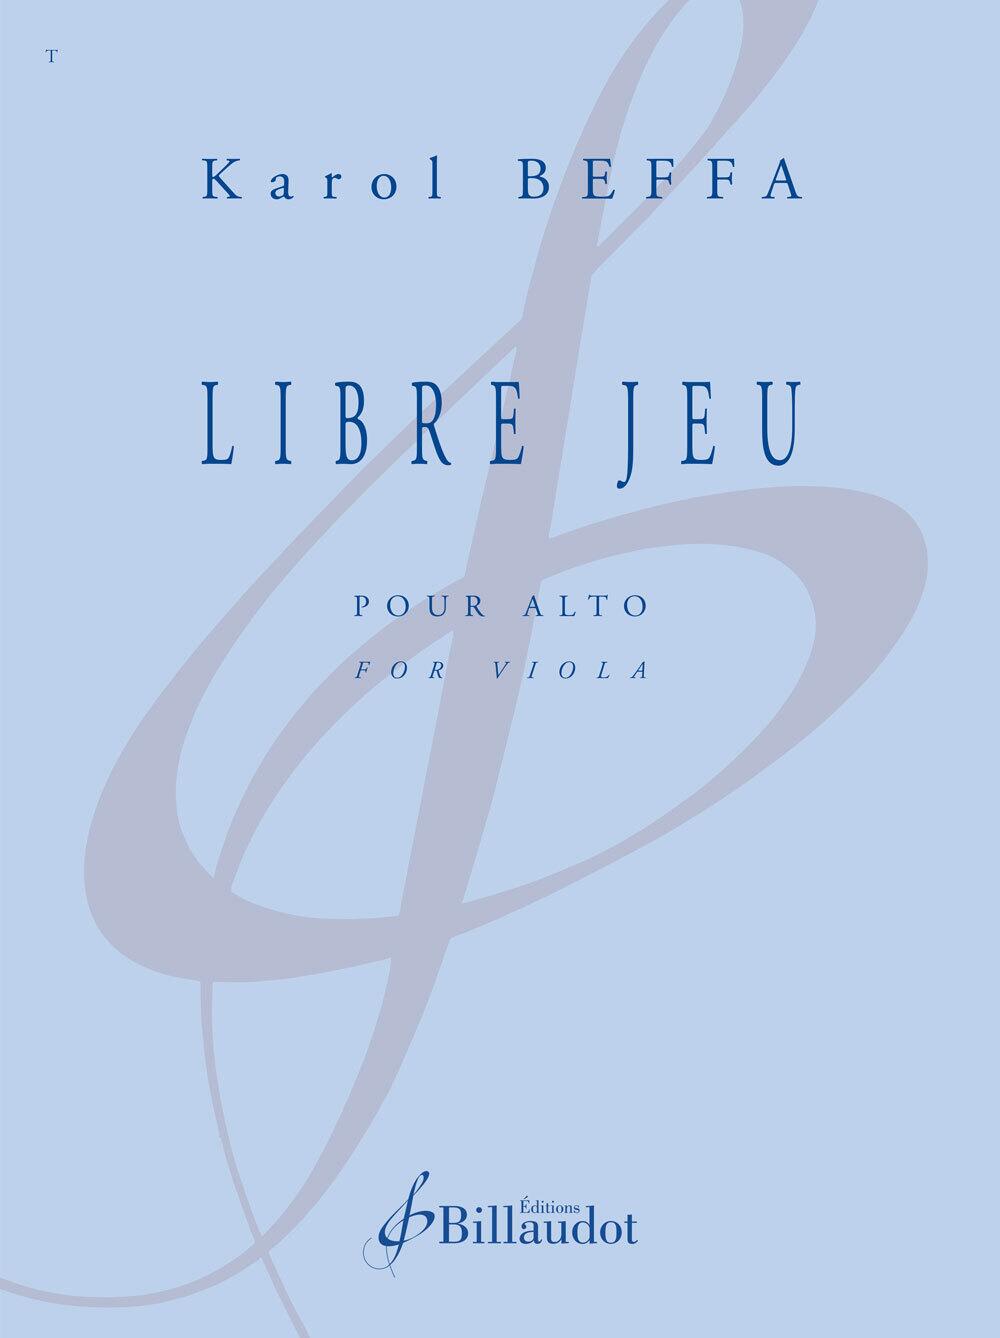 Gérard Libre Jeu Kaorl Beffa : photo 1